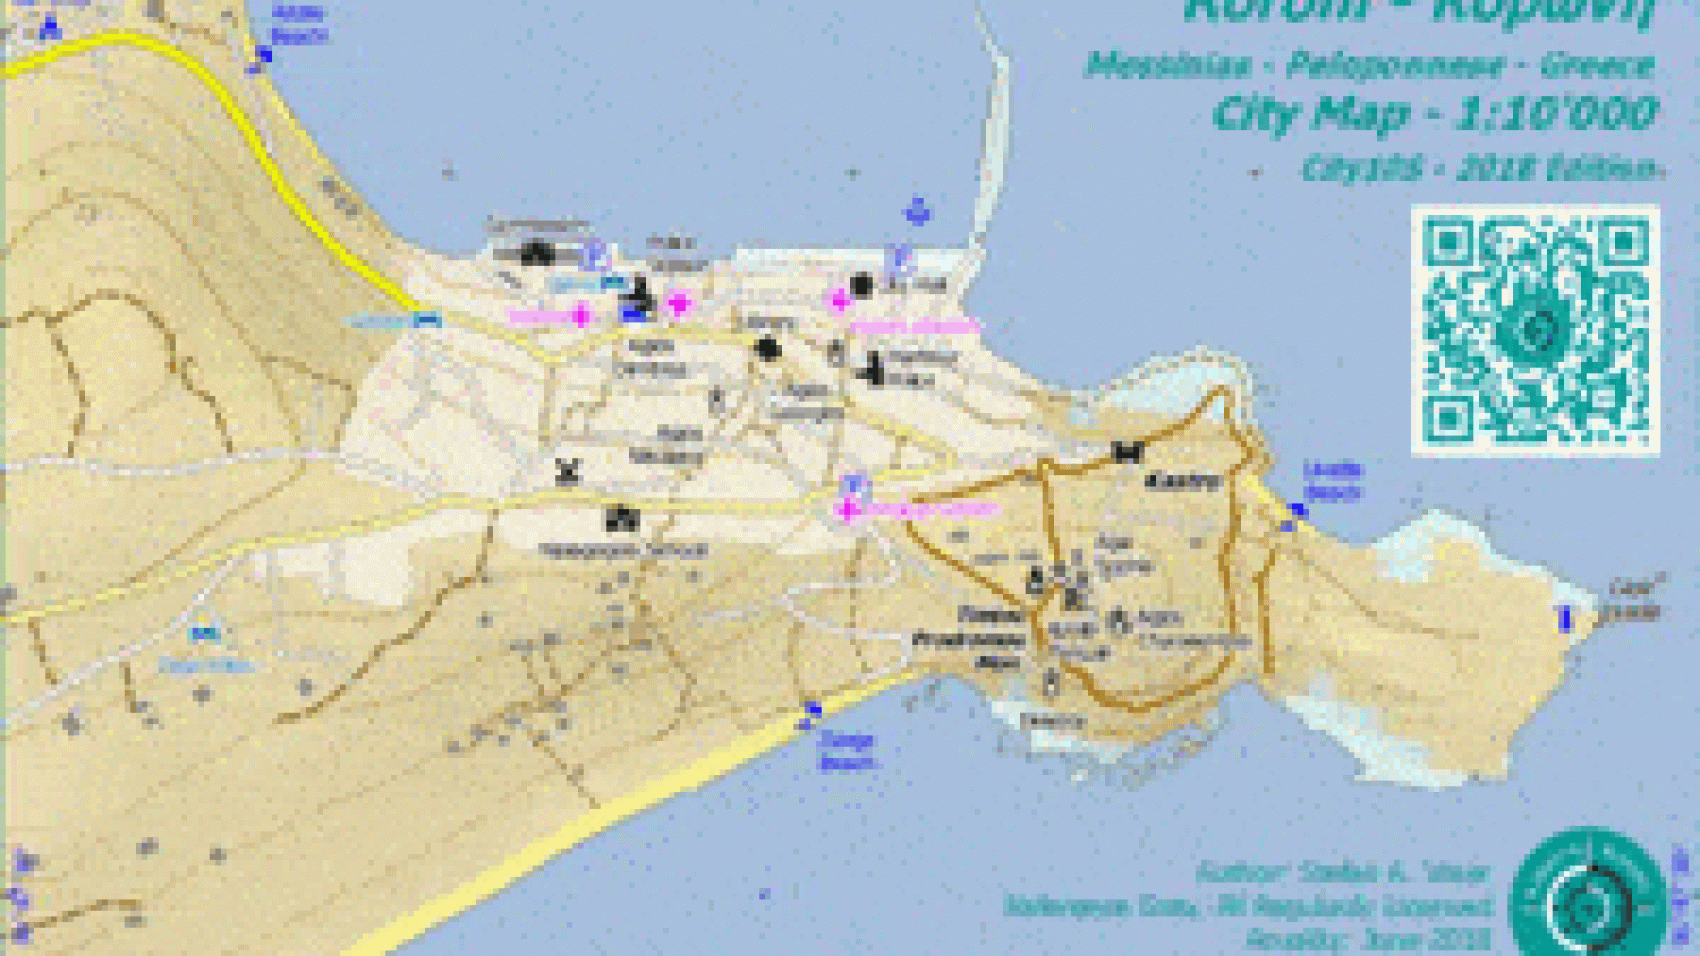 Koroni City Map (2018 v3)